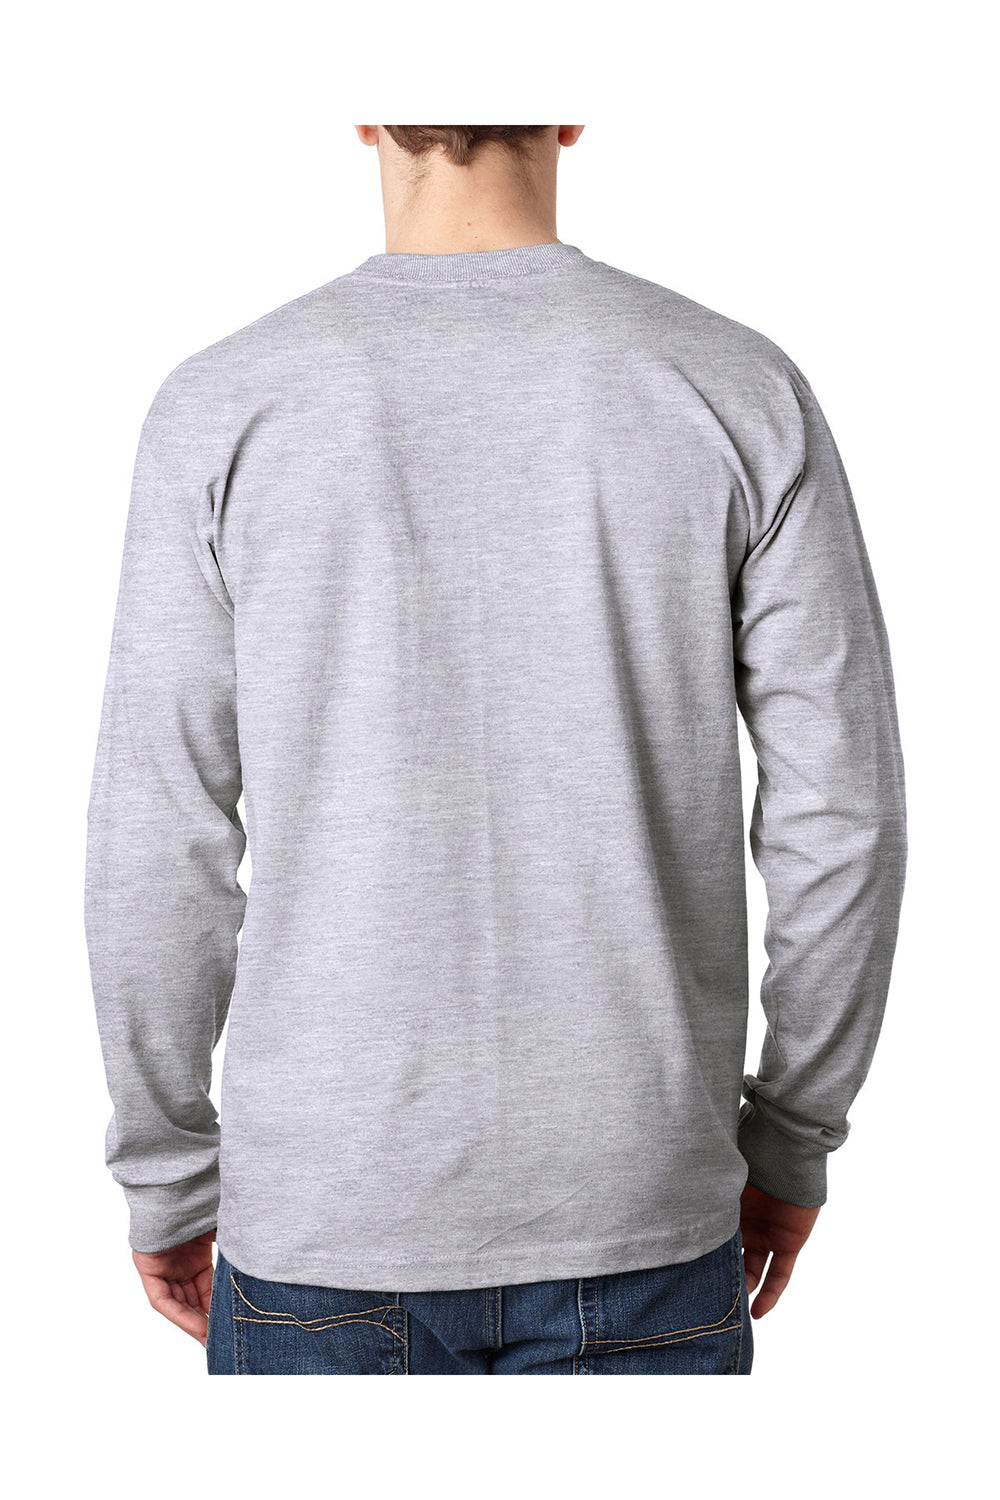 Bayside BA8100 Mens USA Made Long Sleeve Crewneck T-Shirt w/ Pocket Ash Grey Model Back